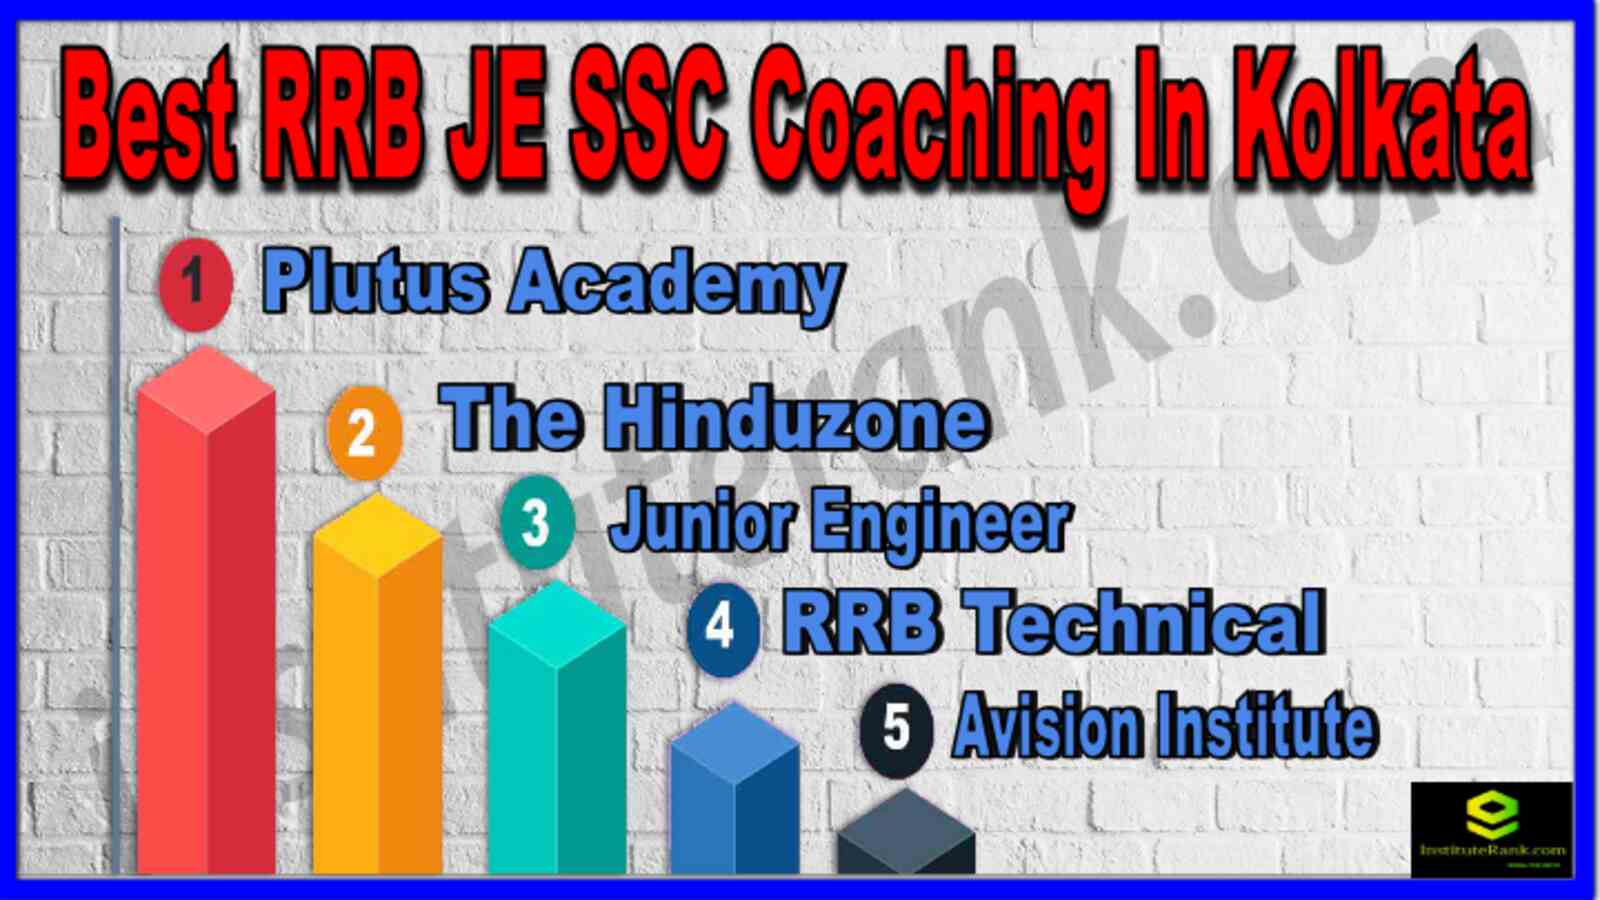 Best RRB JE SSC Coaching In Kolkata